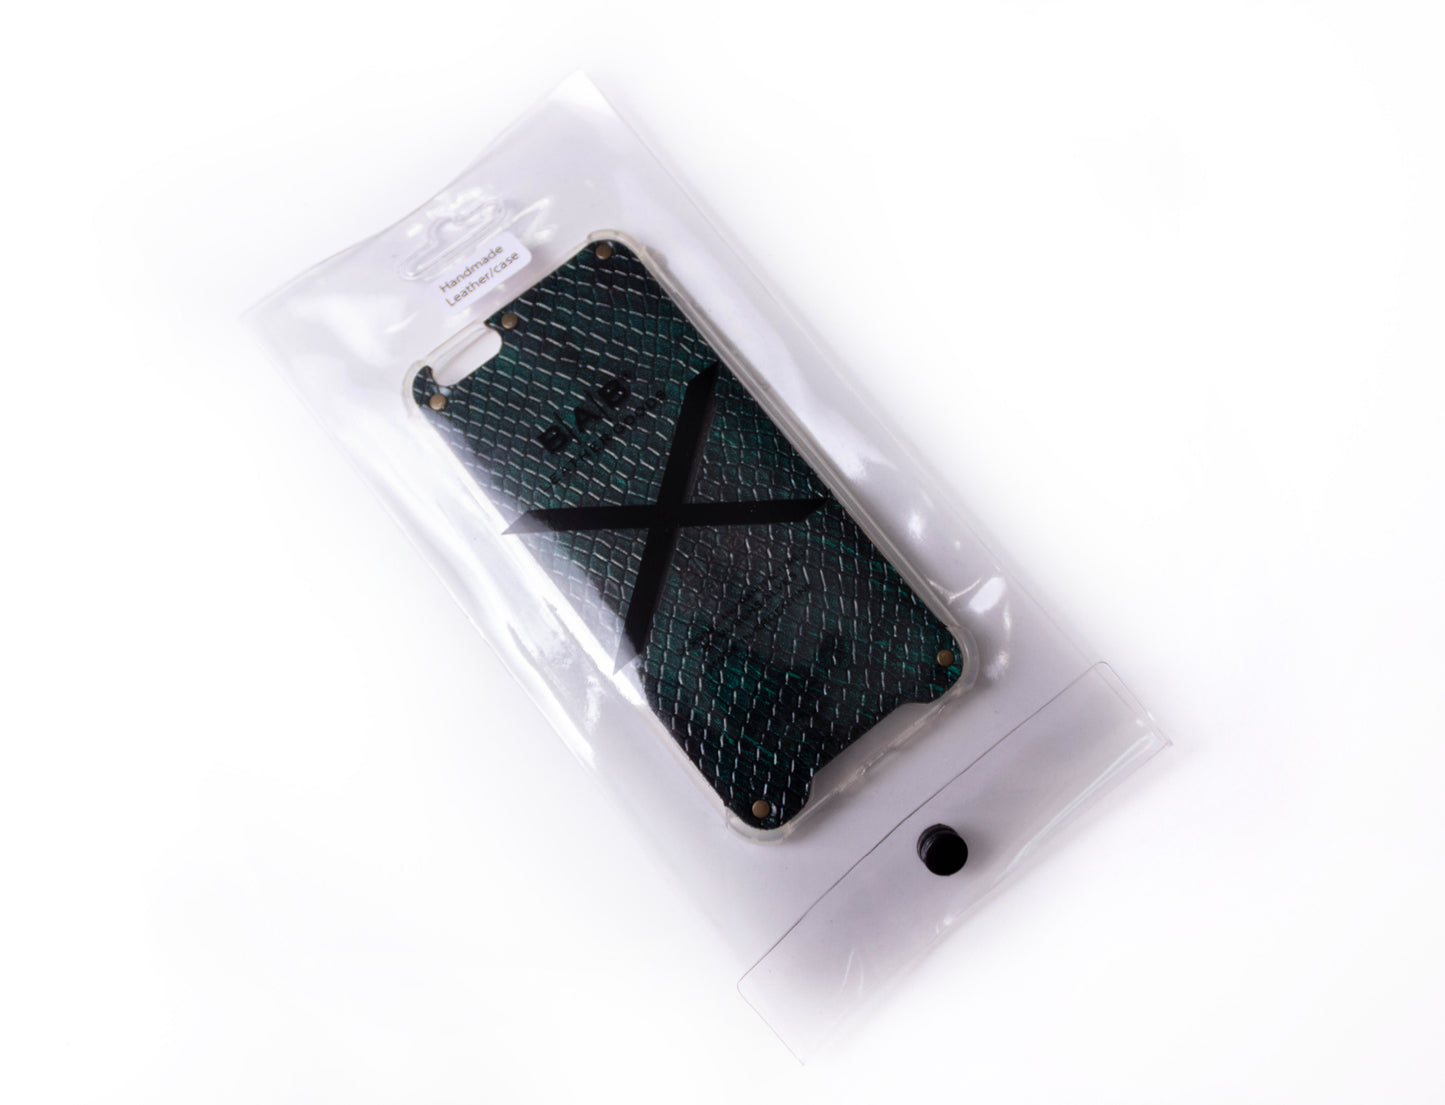 Capa para iPhone de Couro Genuíno Python Verde Texturizado cortado e gravado a laser, 5 Rebites de Bronze.- F36